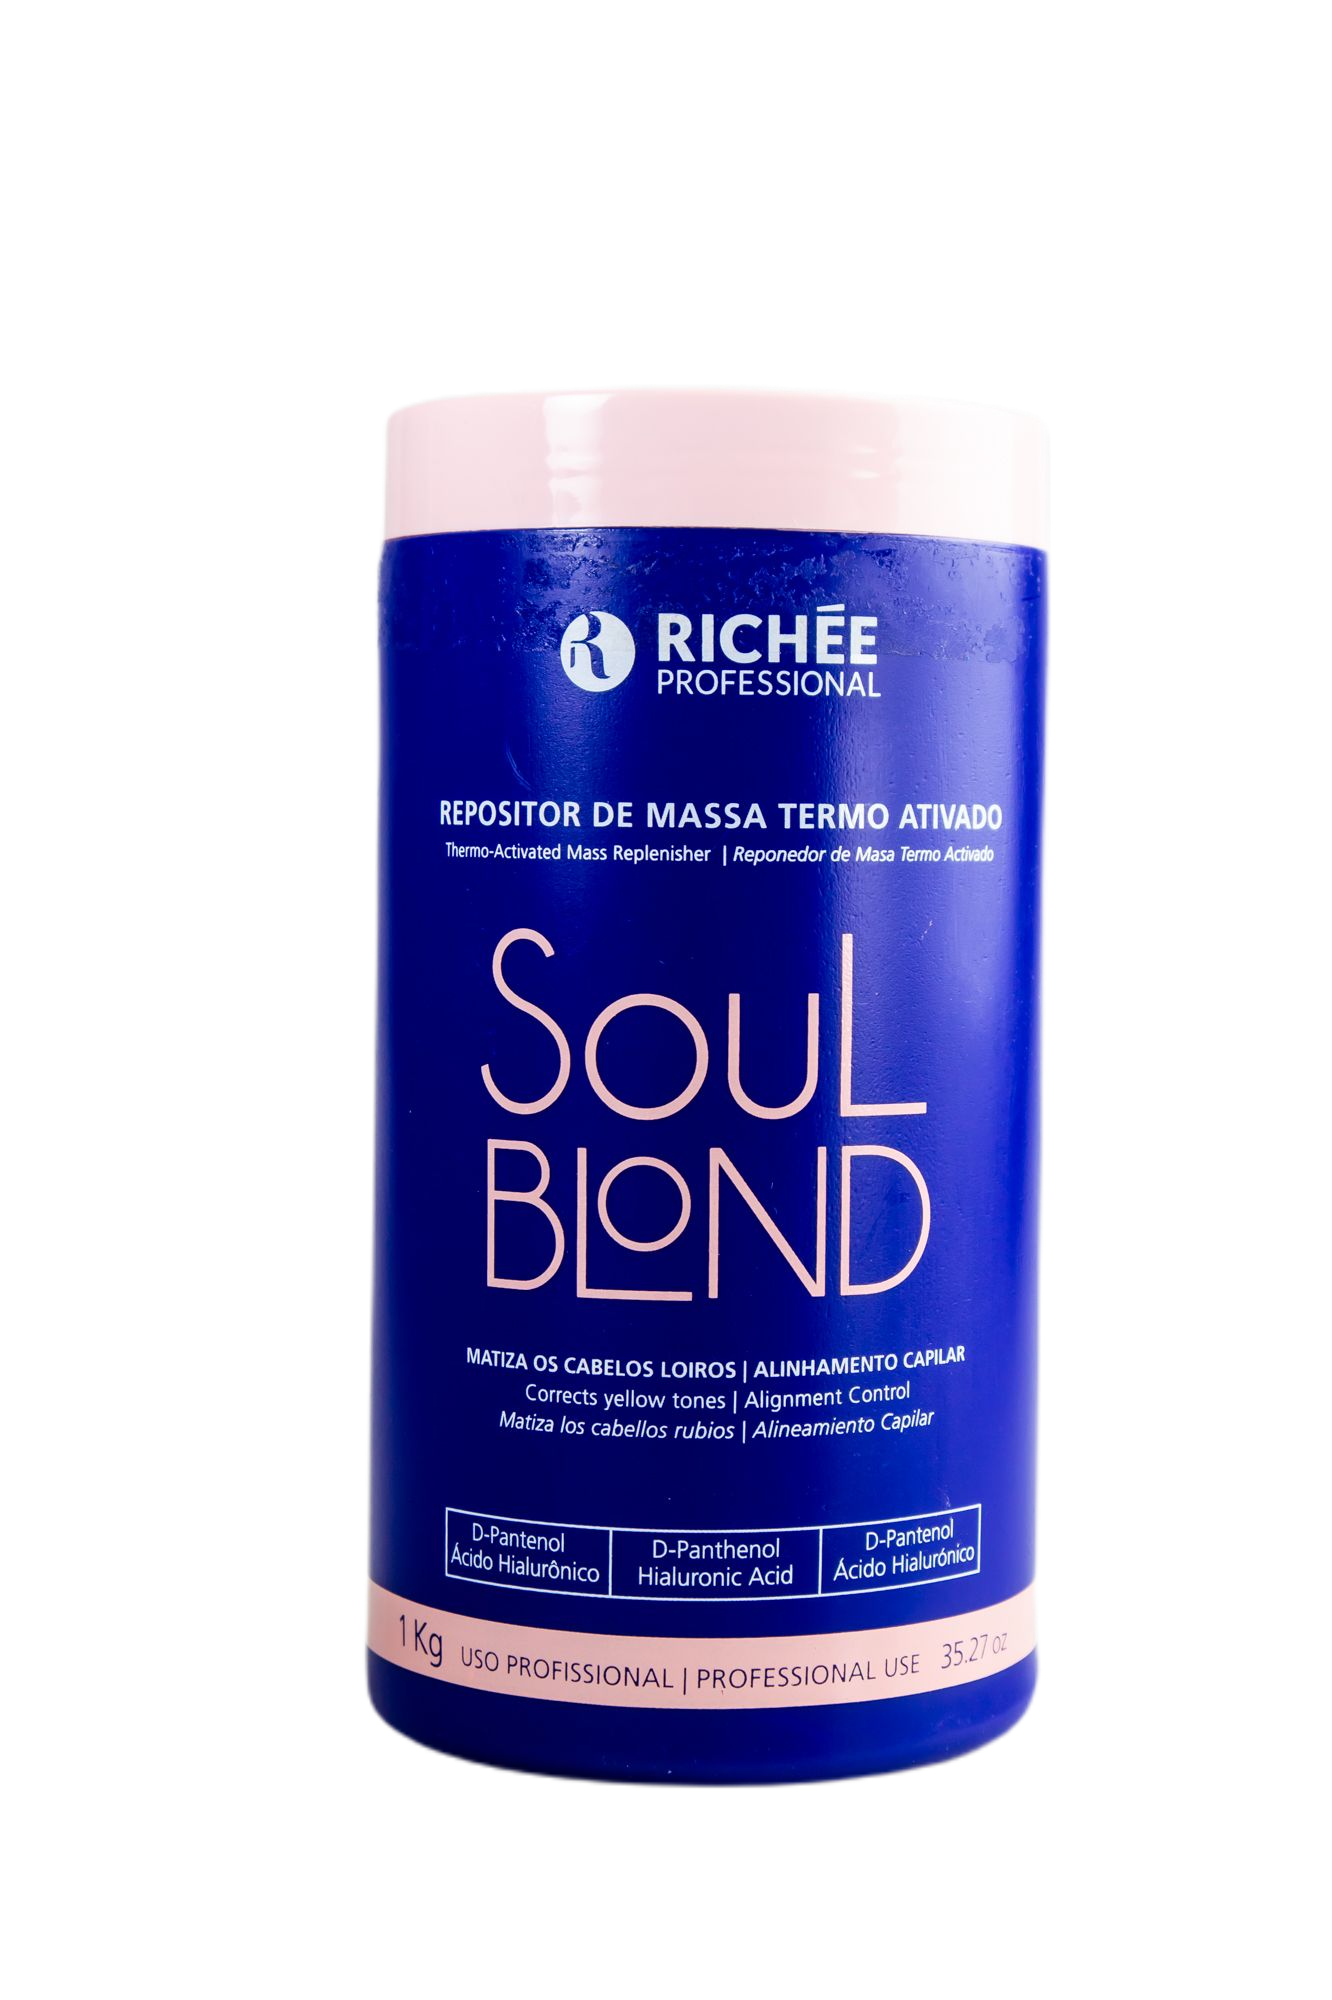 Richée Brazilian Keratin Treatment Thermo Activated Mass Replenisher Soul Blond Hair Treatment Mask 1Kg - Richée